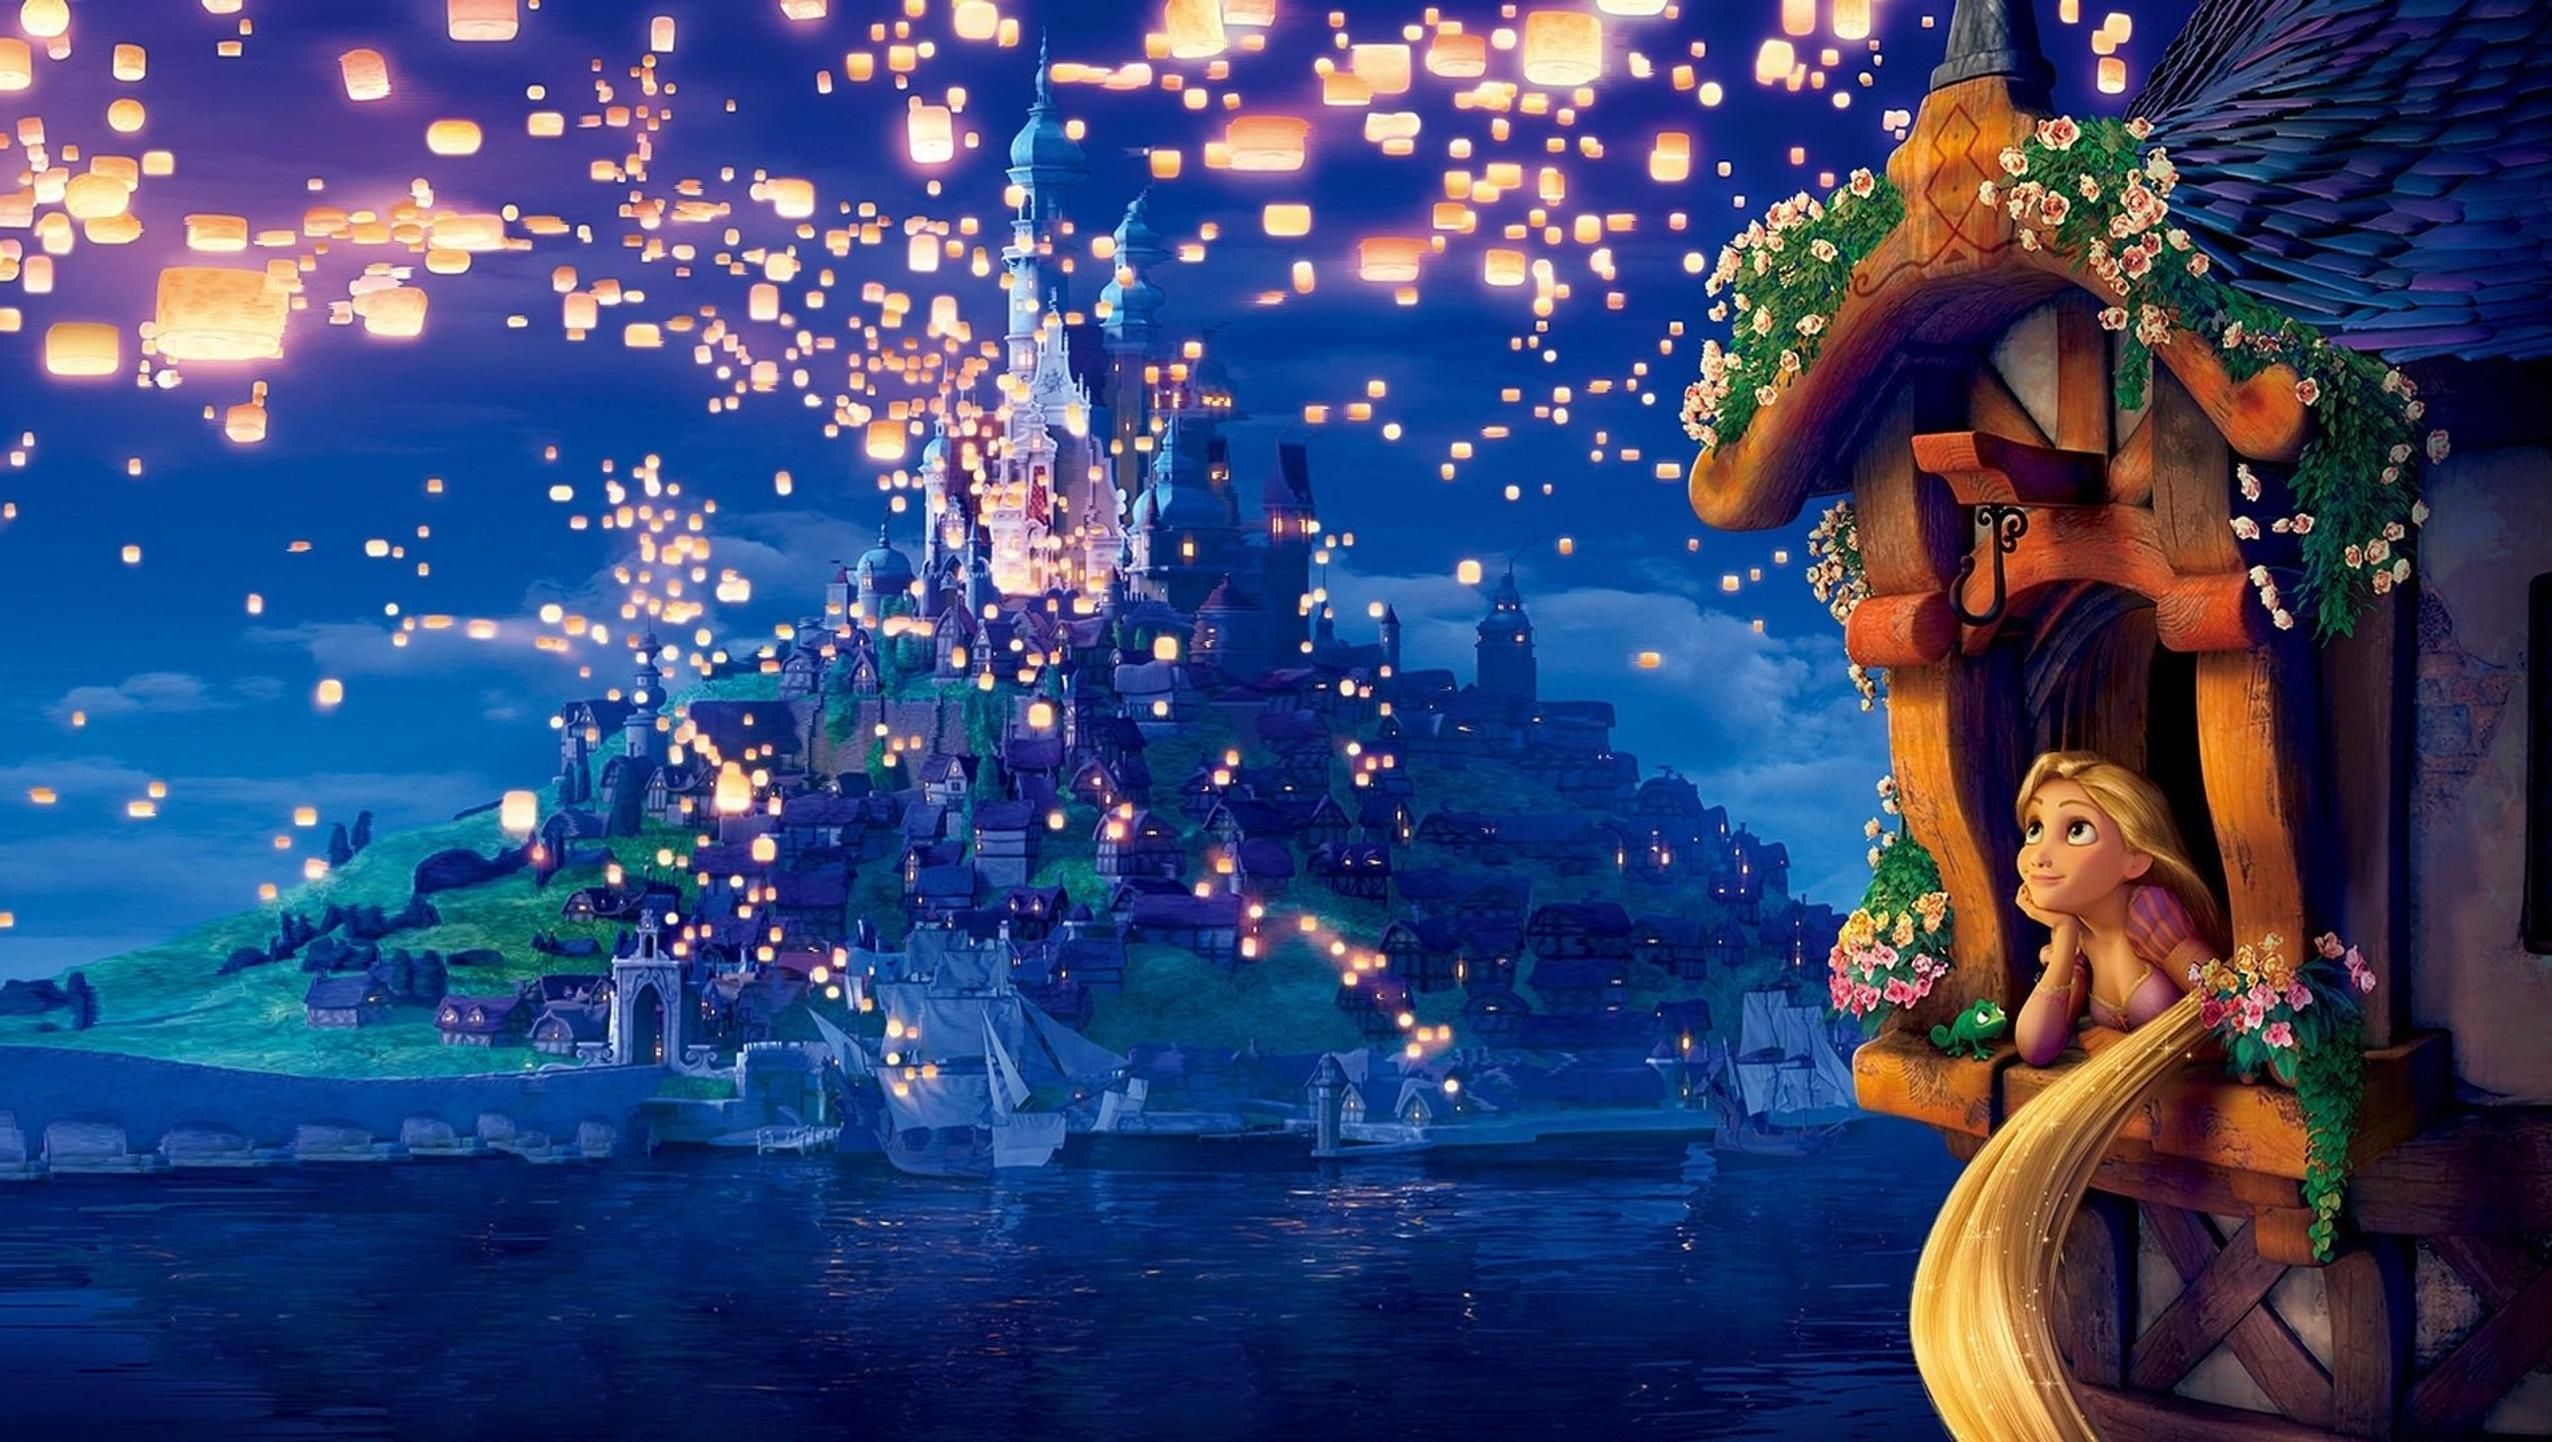 Disney's tangled the night before christmas - Rapunzel